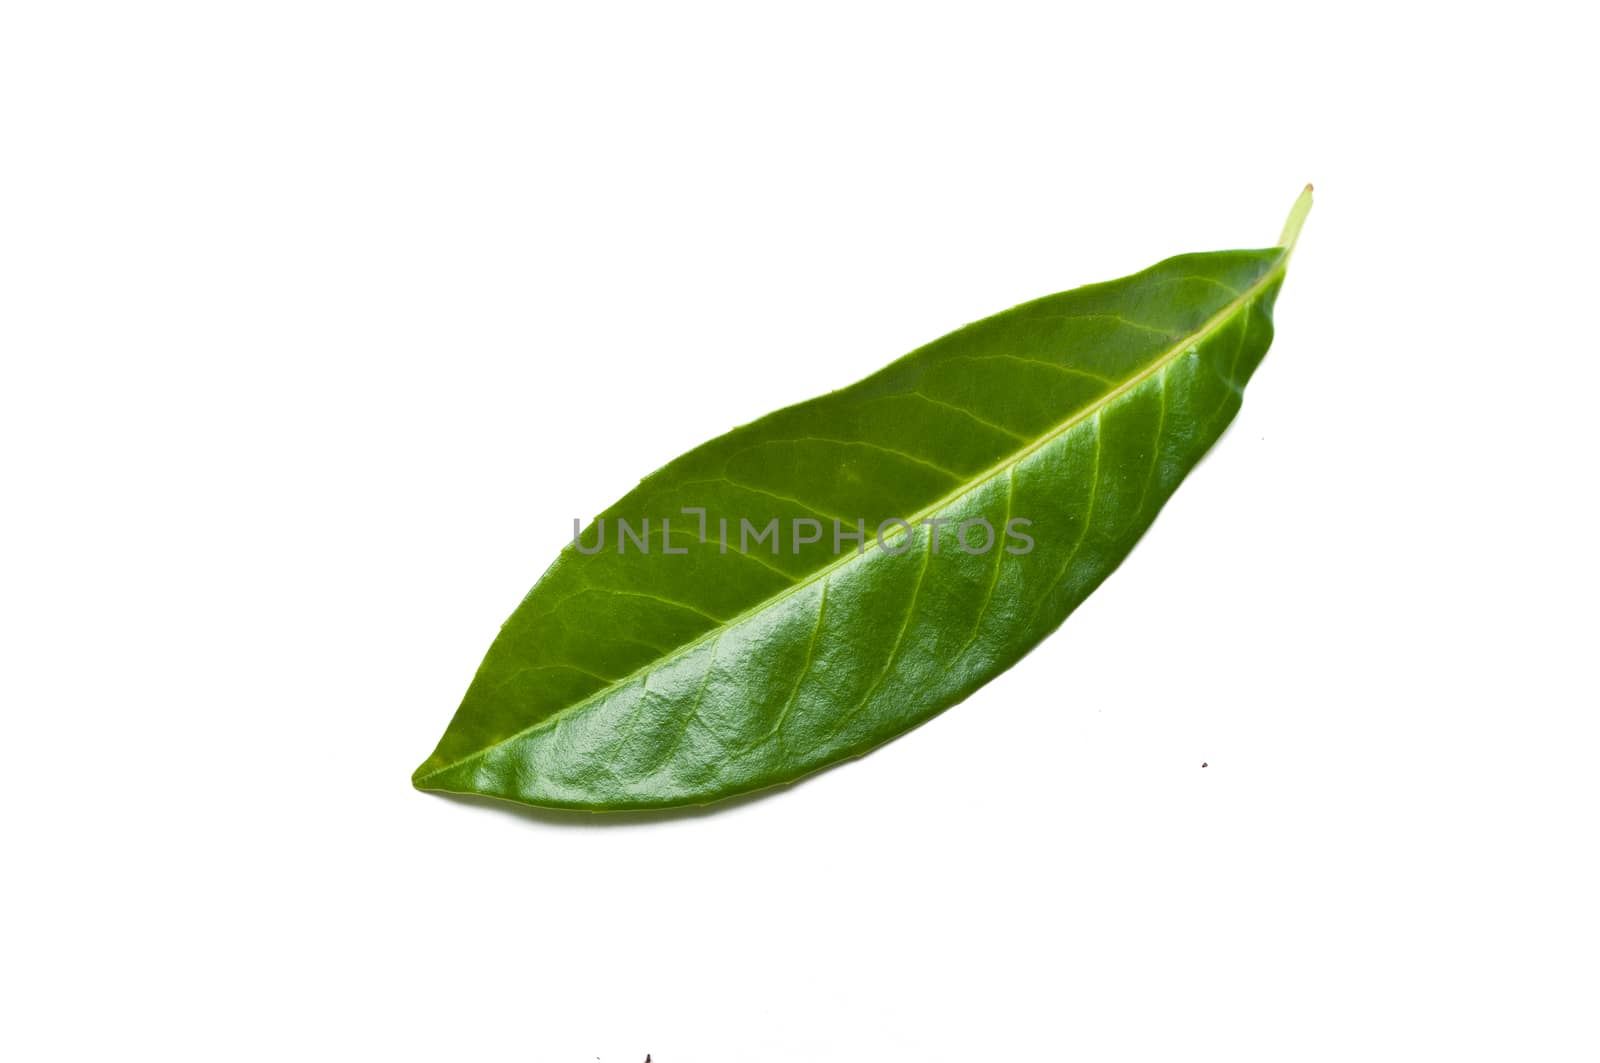 Isolated leaf of   prunus laurocerasus rotundifolia on white background